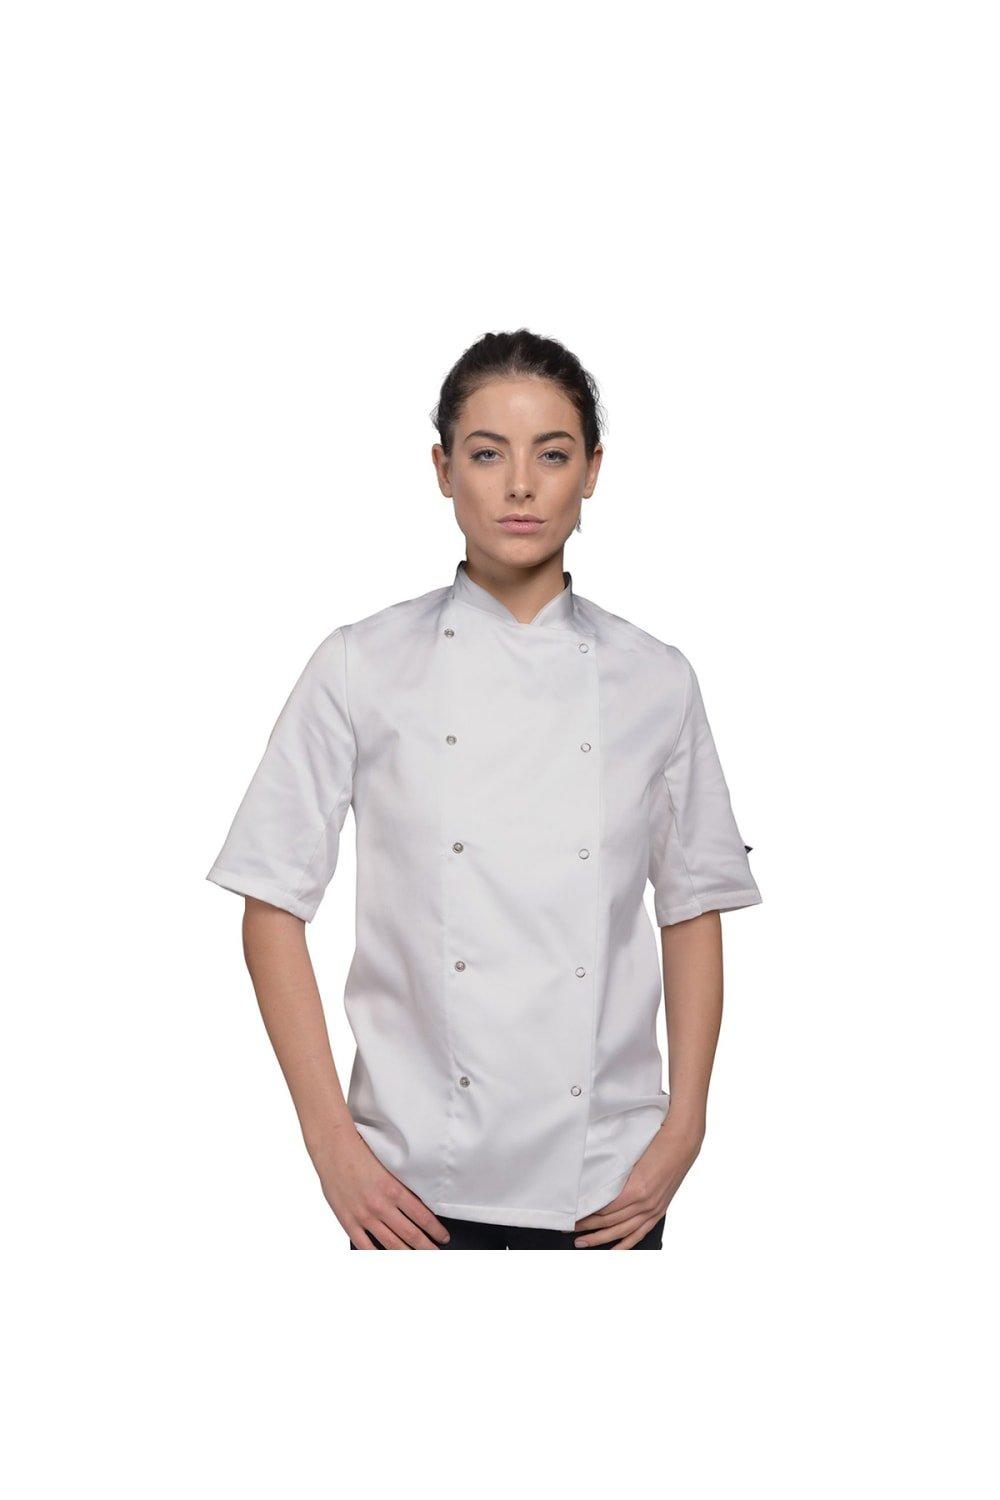 Lightweight Short Sleeve Chefs Jacket Chefswear Pack of 2